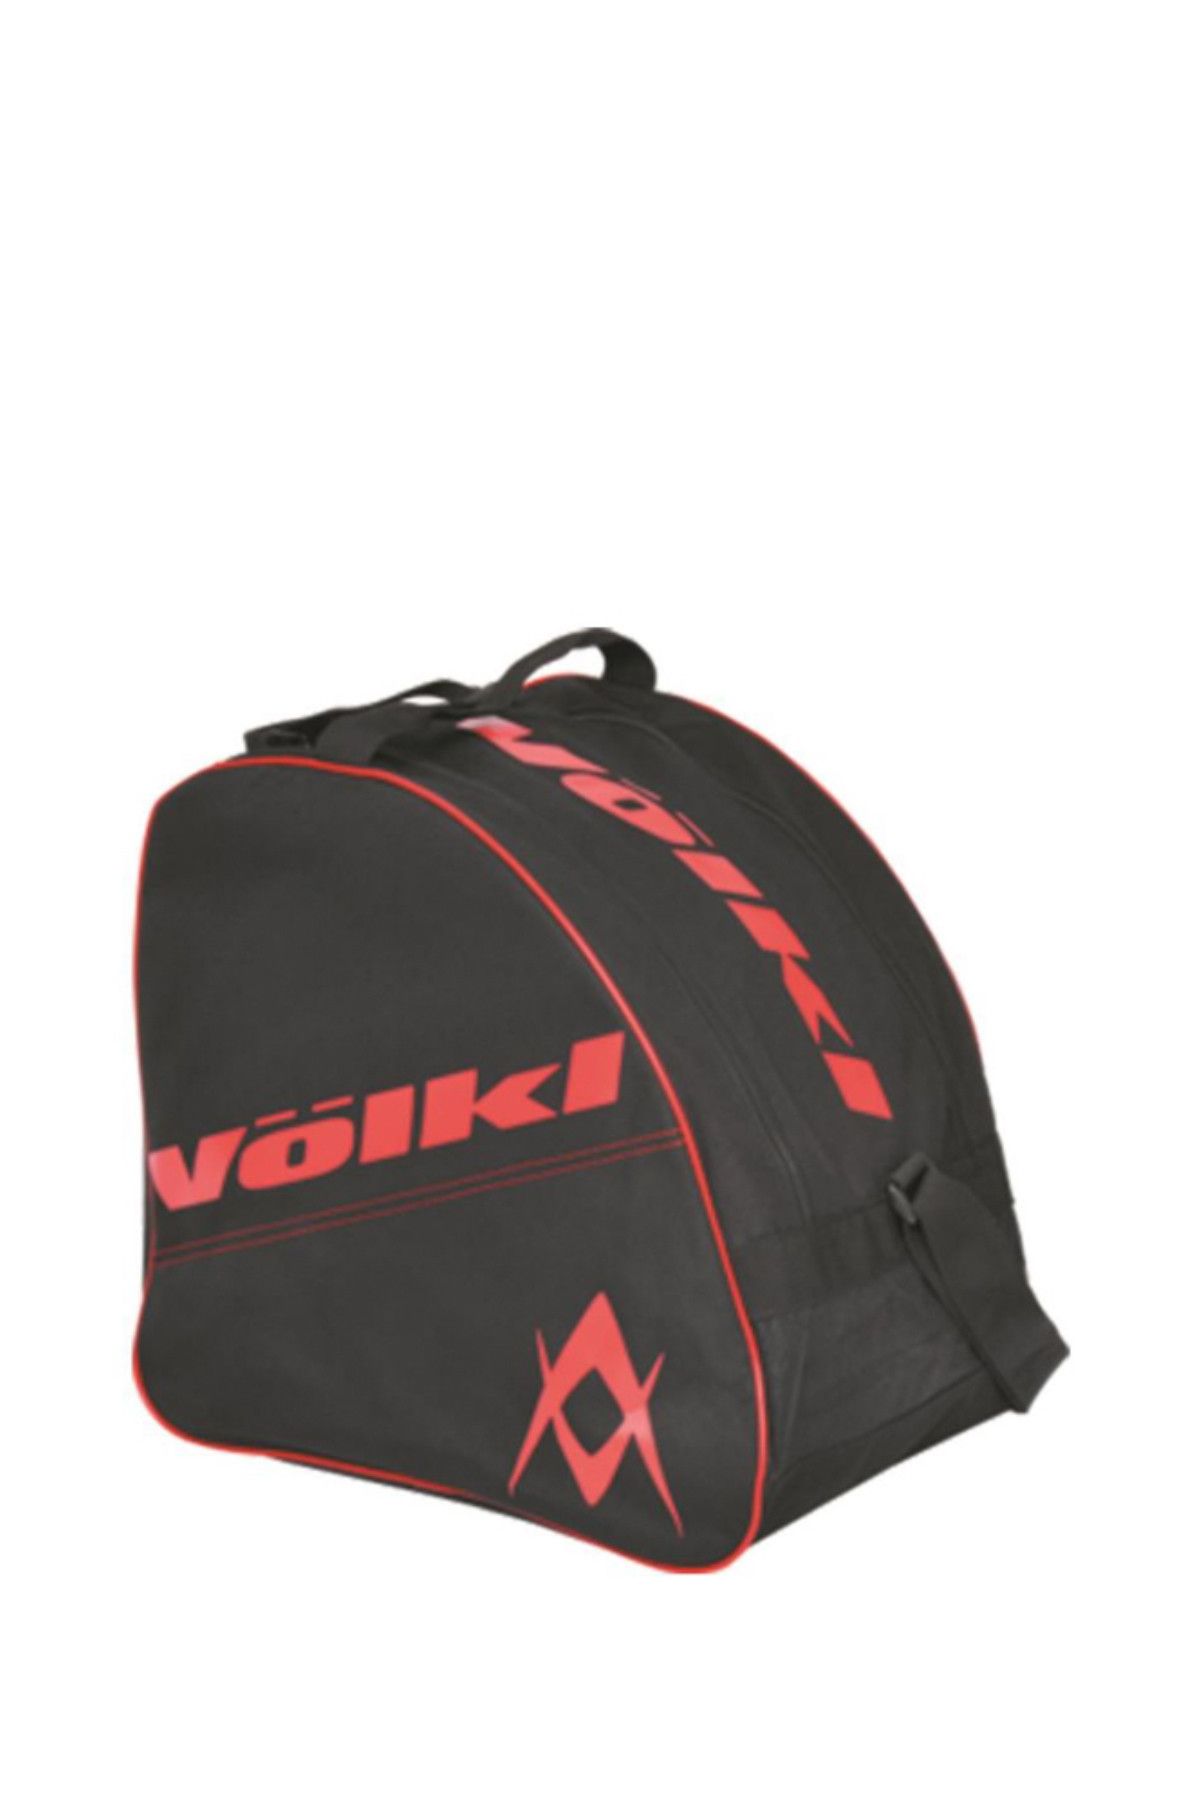 Völkl Völkl Classic Boot Bag Taşıma Çantası (.)